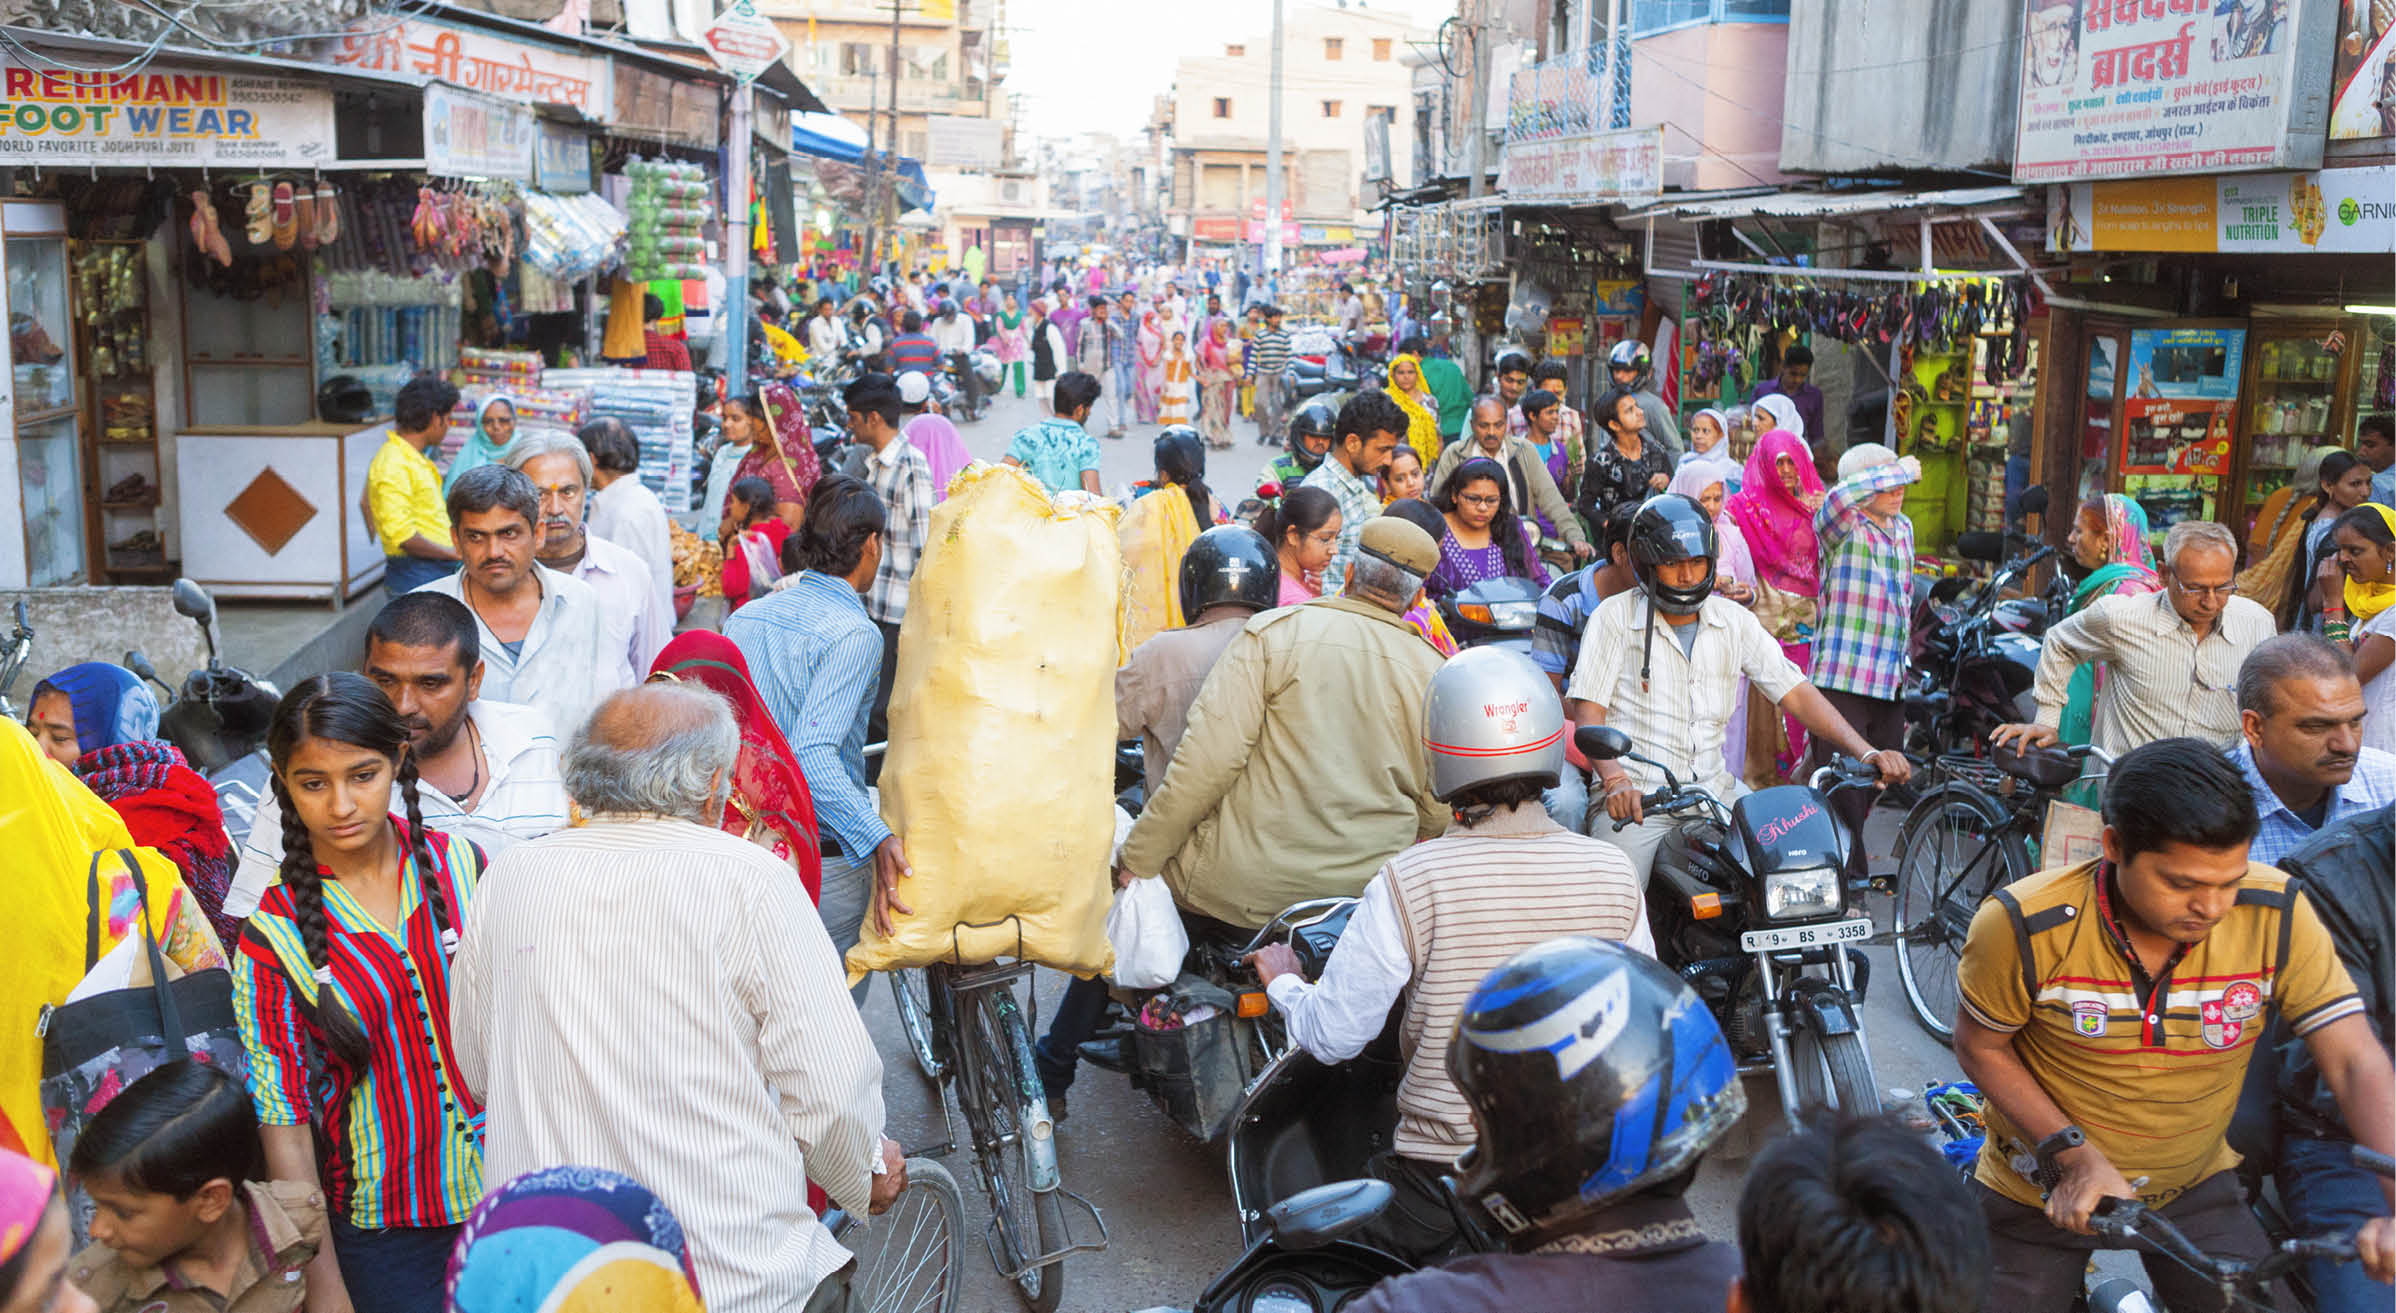 Sardar Market crowded with people in Jodhpur, India